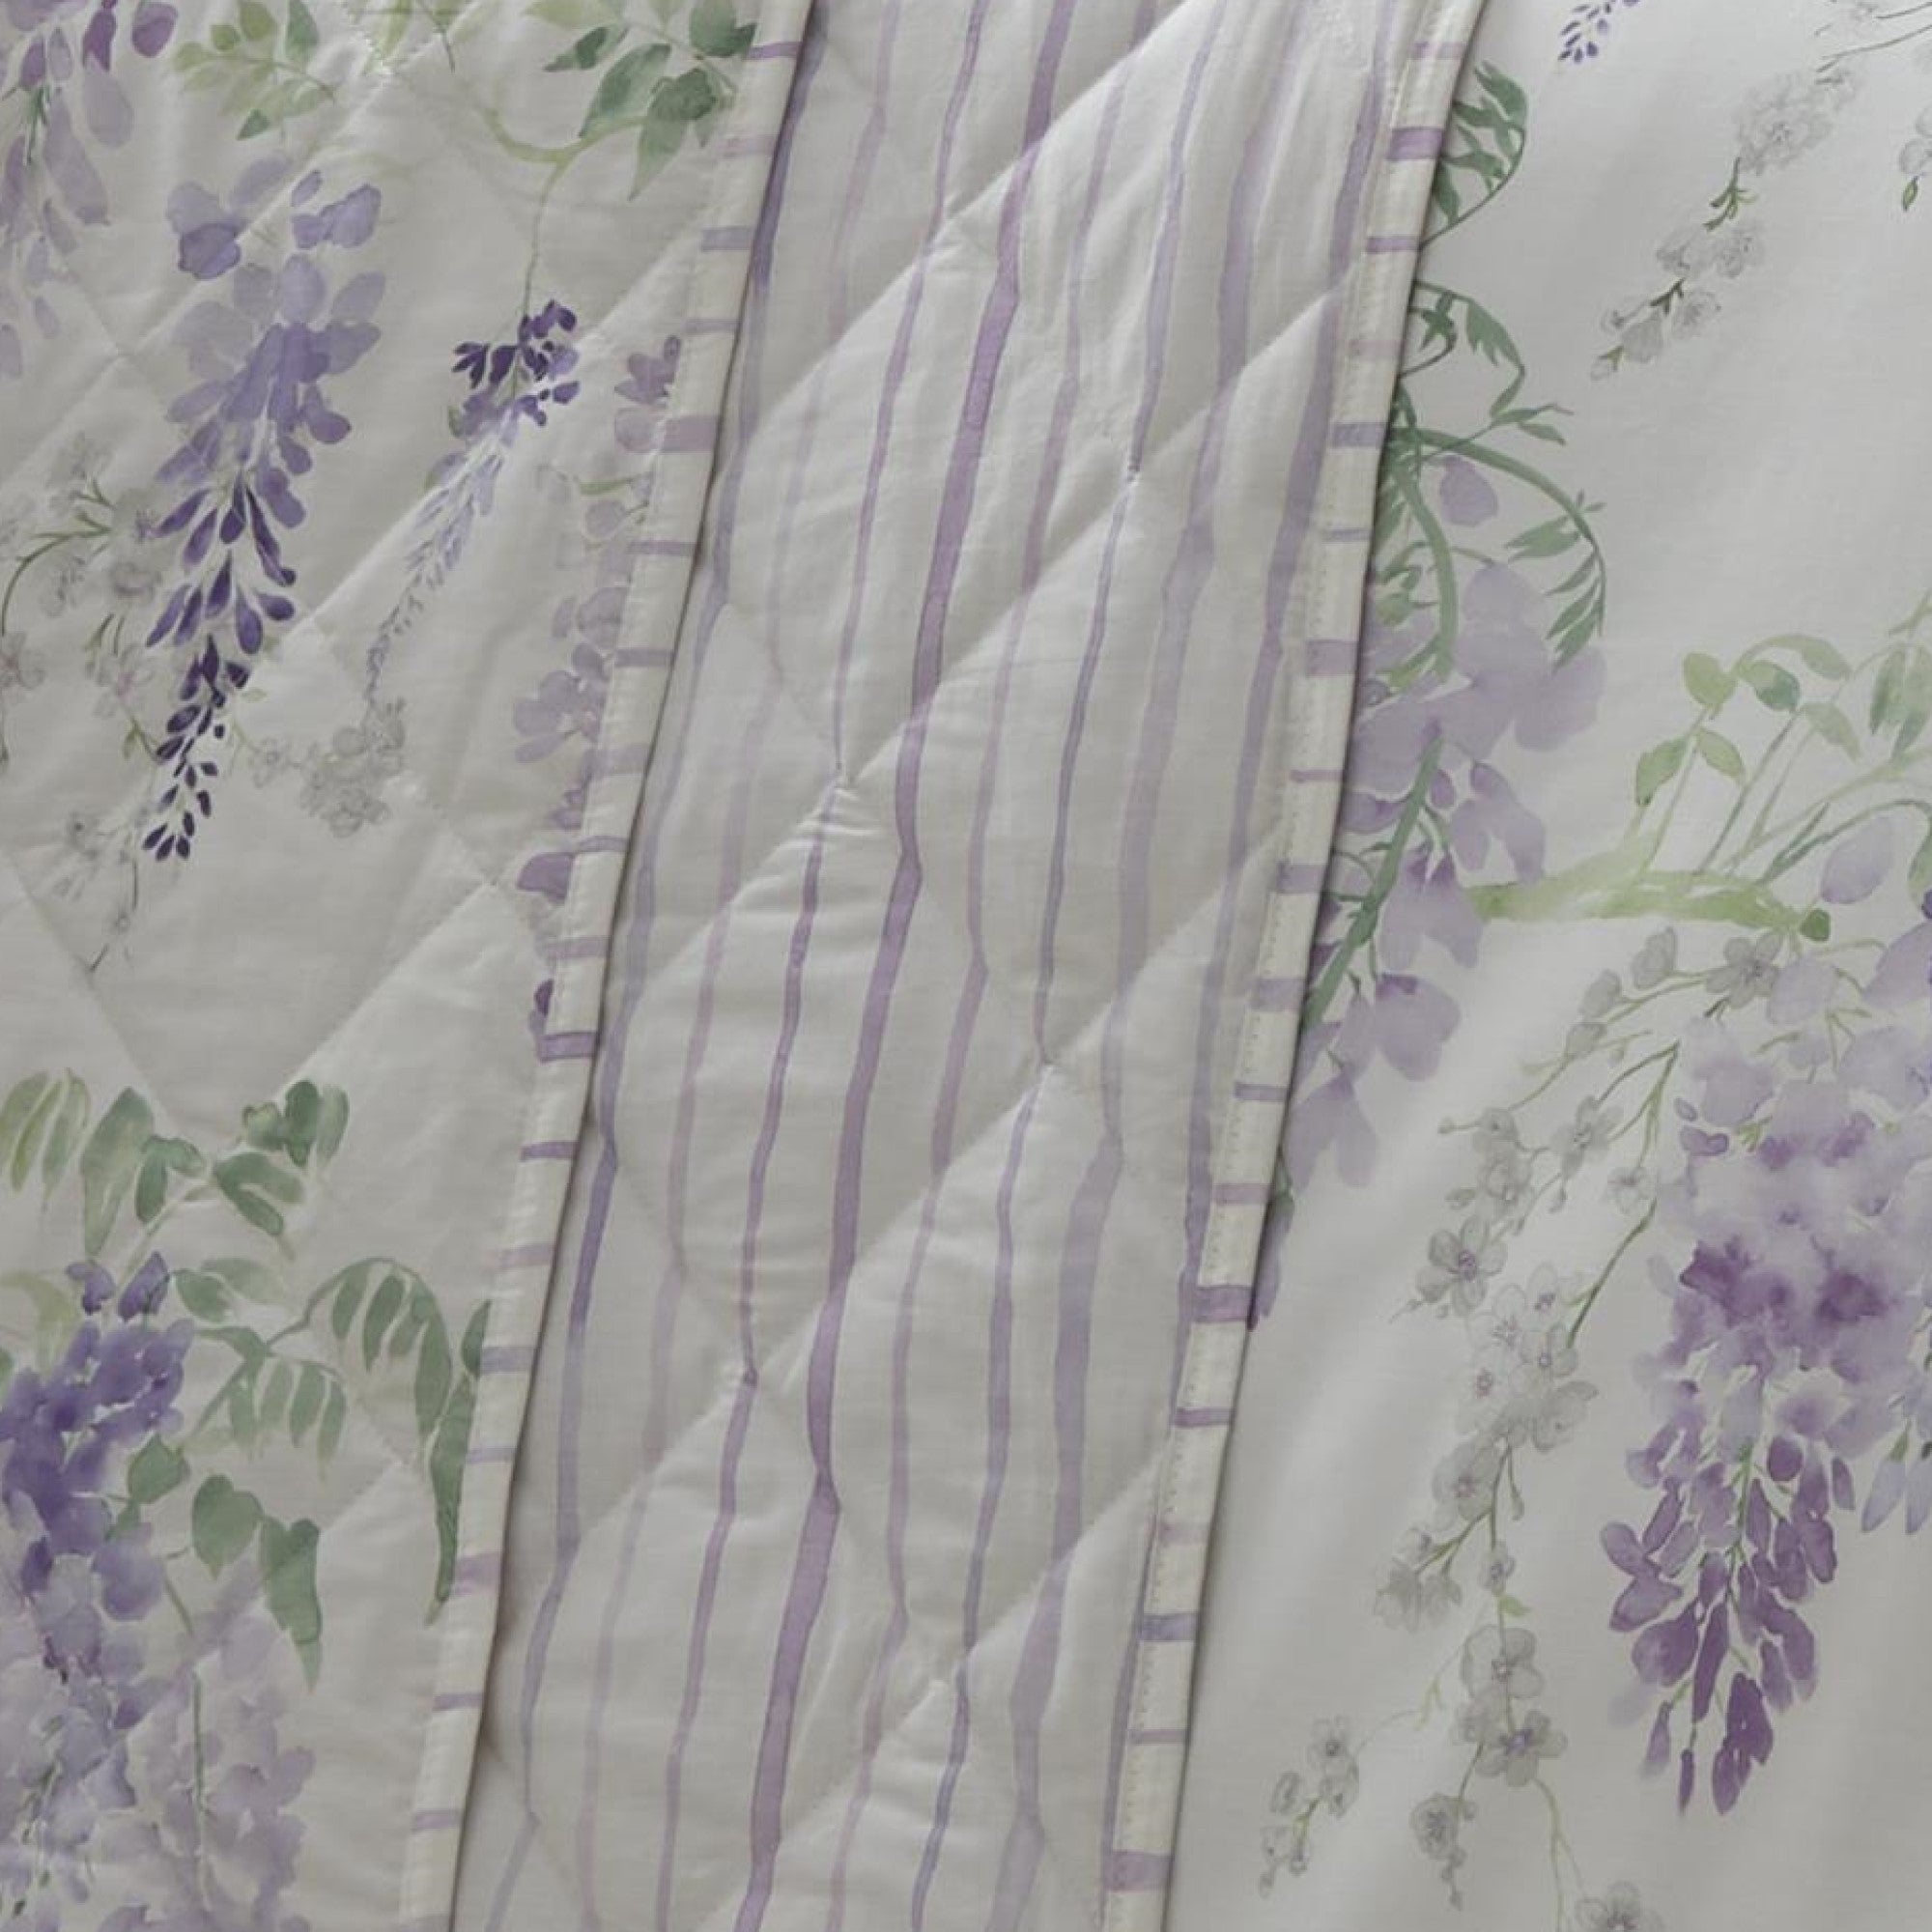 Bedspread Wisteria by Dreams & Drapes Design in Lilac